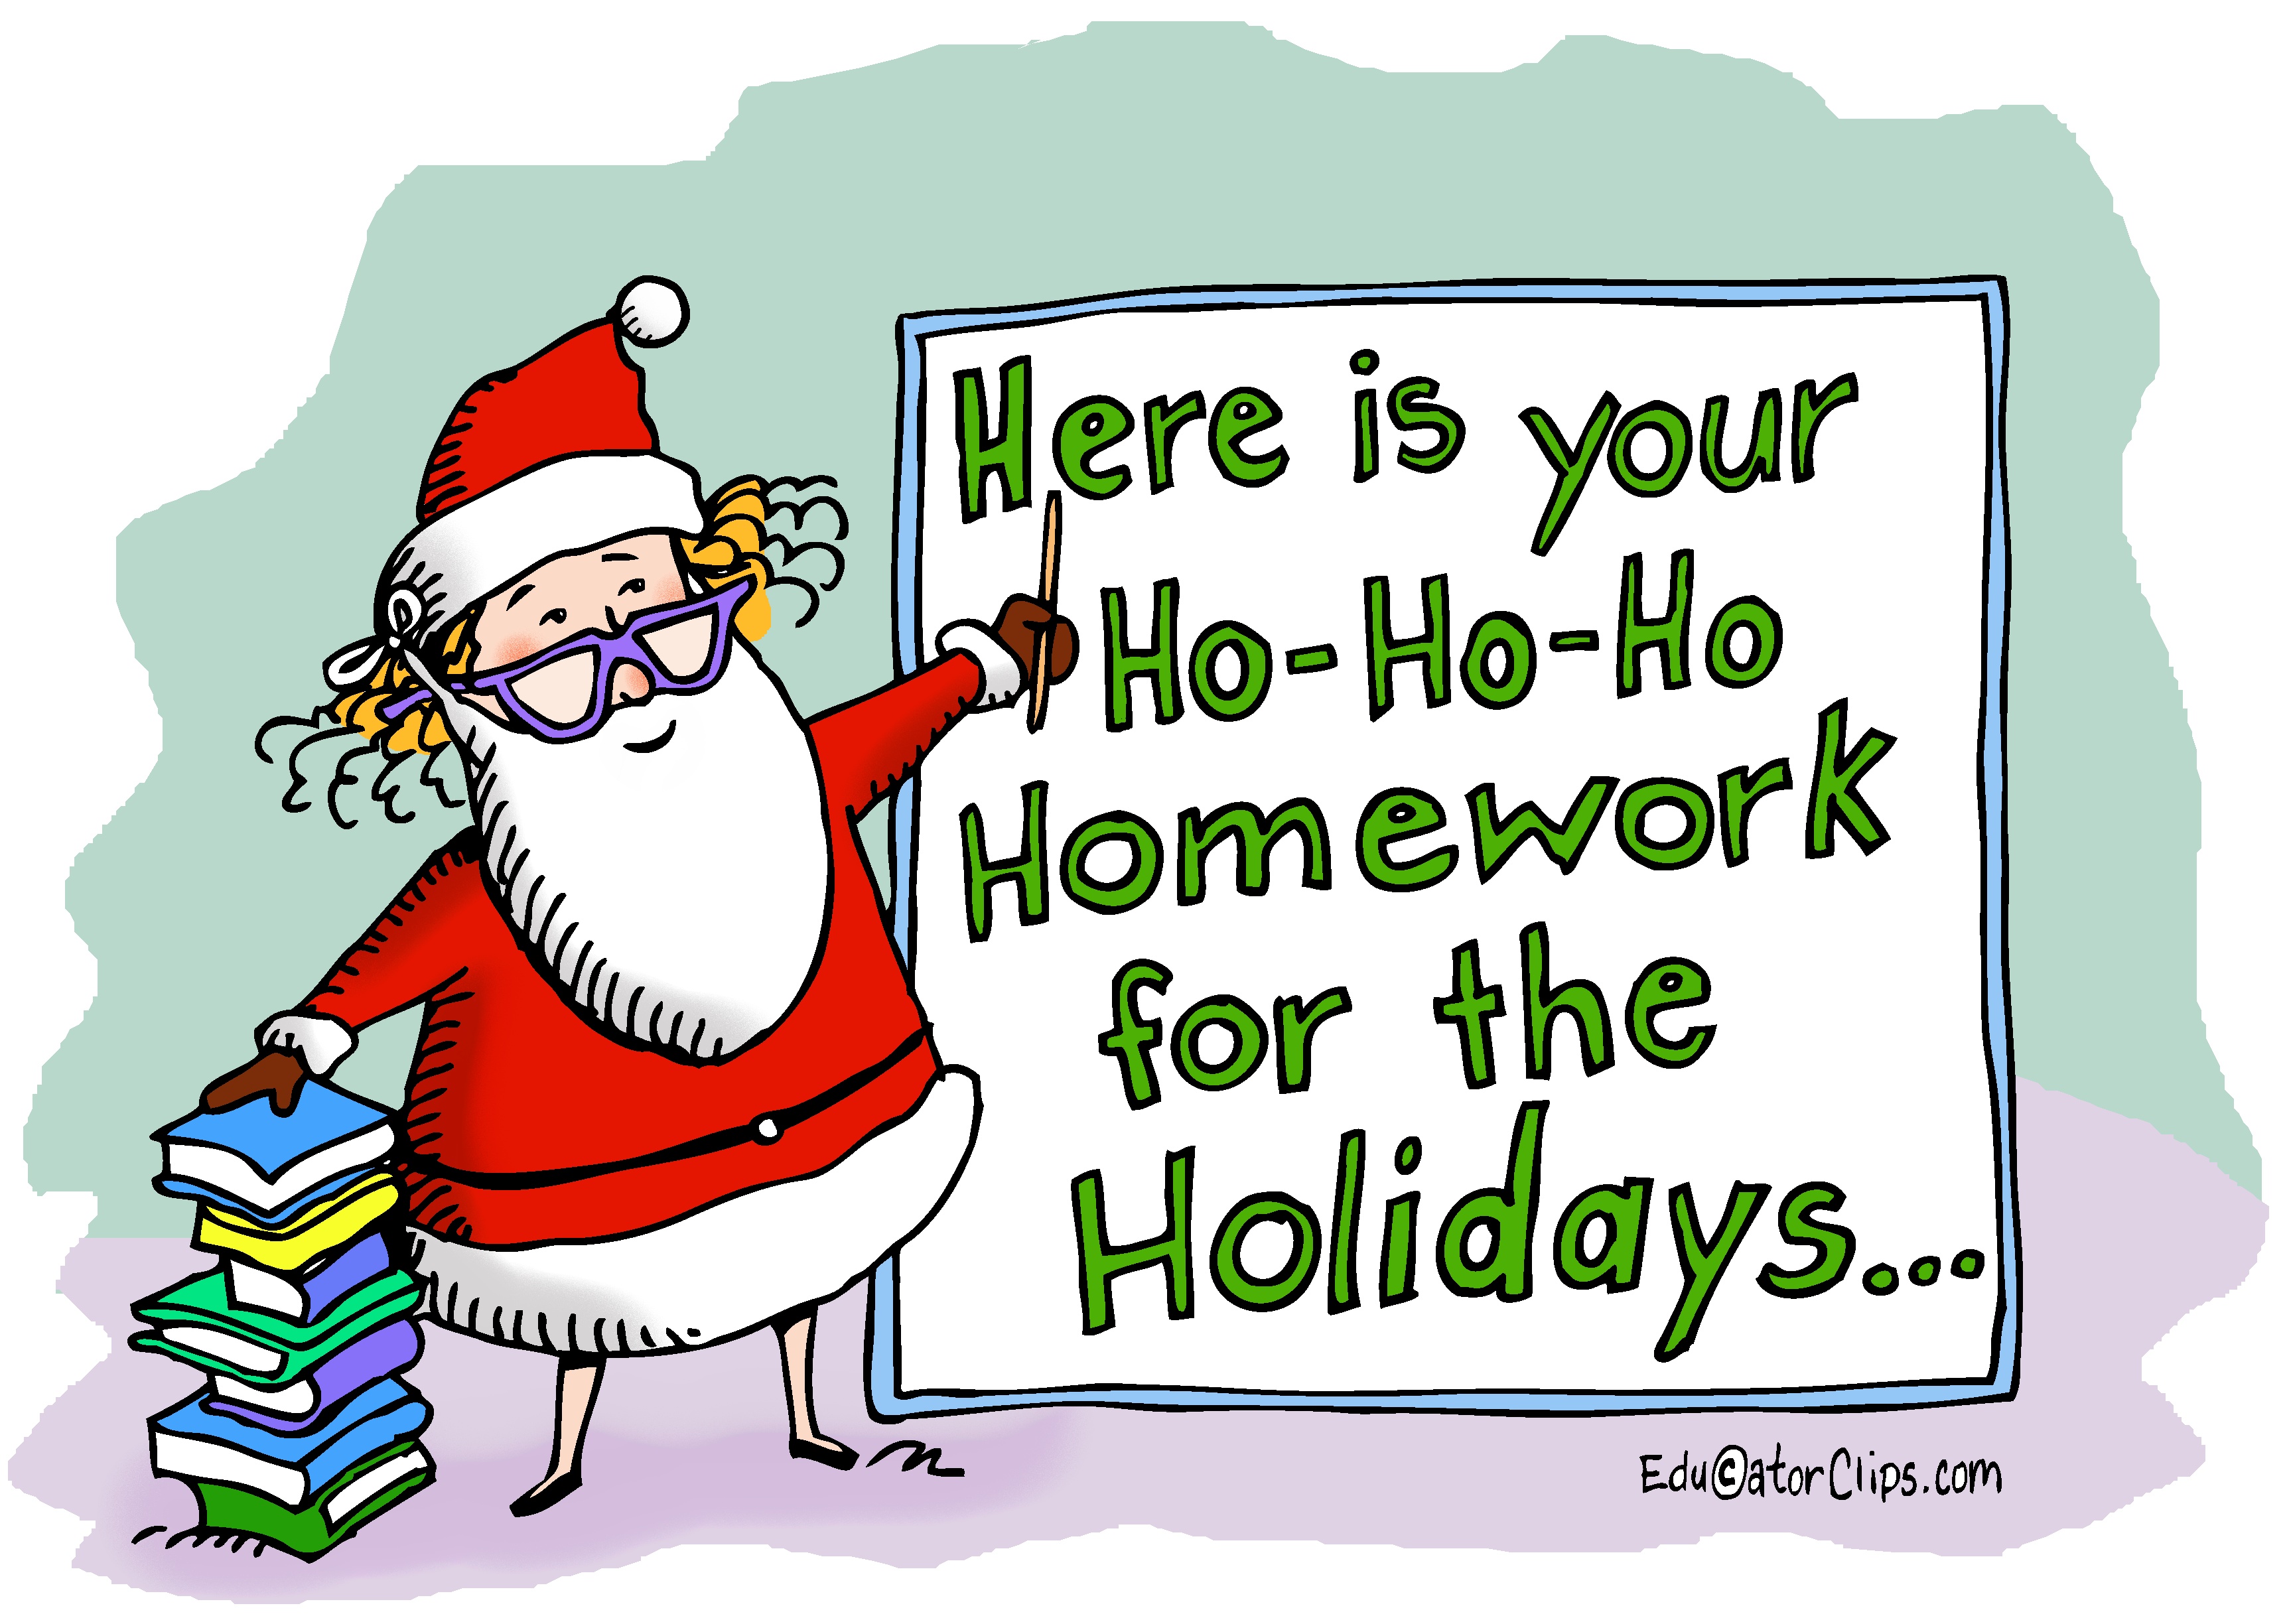 holiday homework or holiday's homework